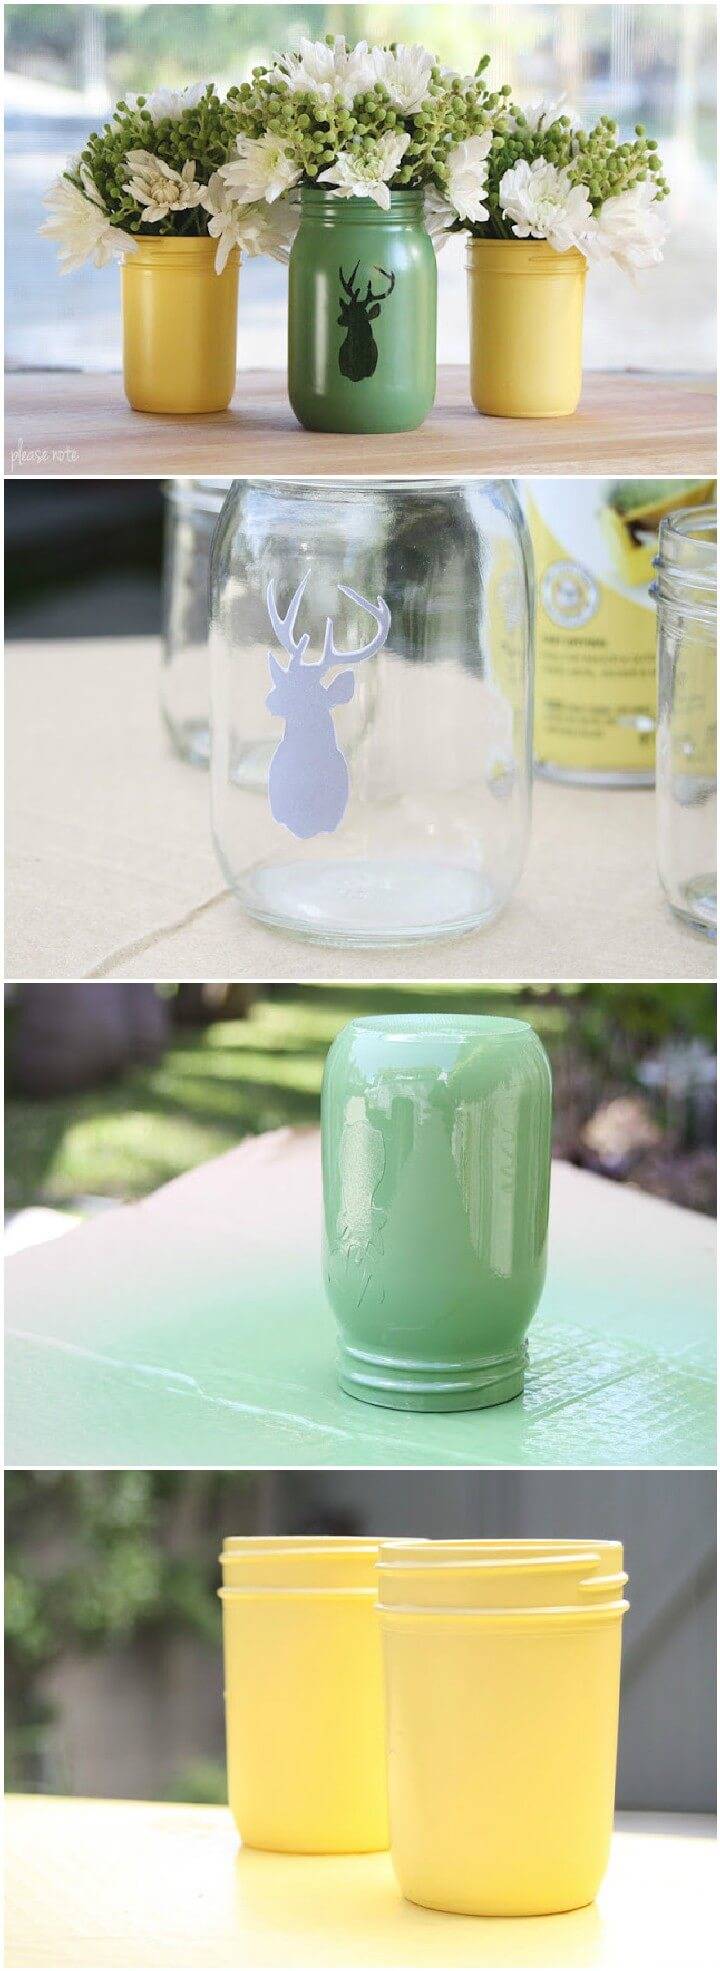 DIY Spray Painted Mason Jar Vases